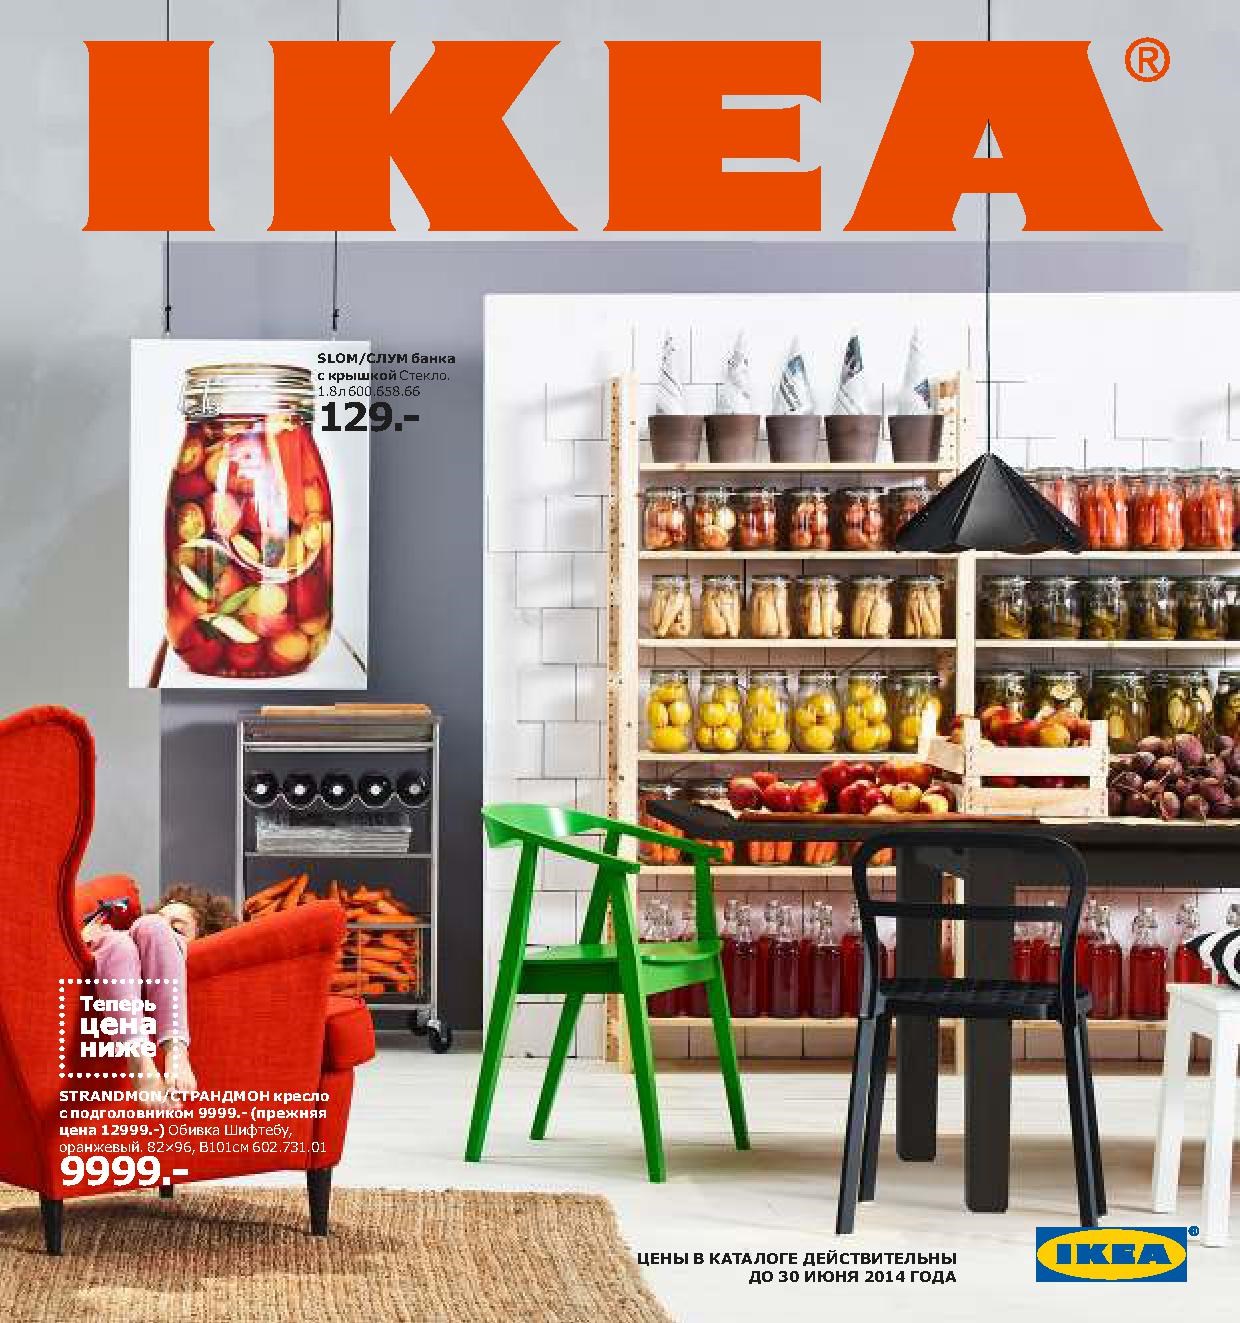 Ikea.com  интернет-магазин